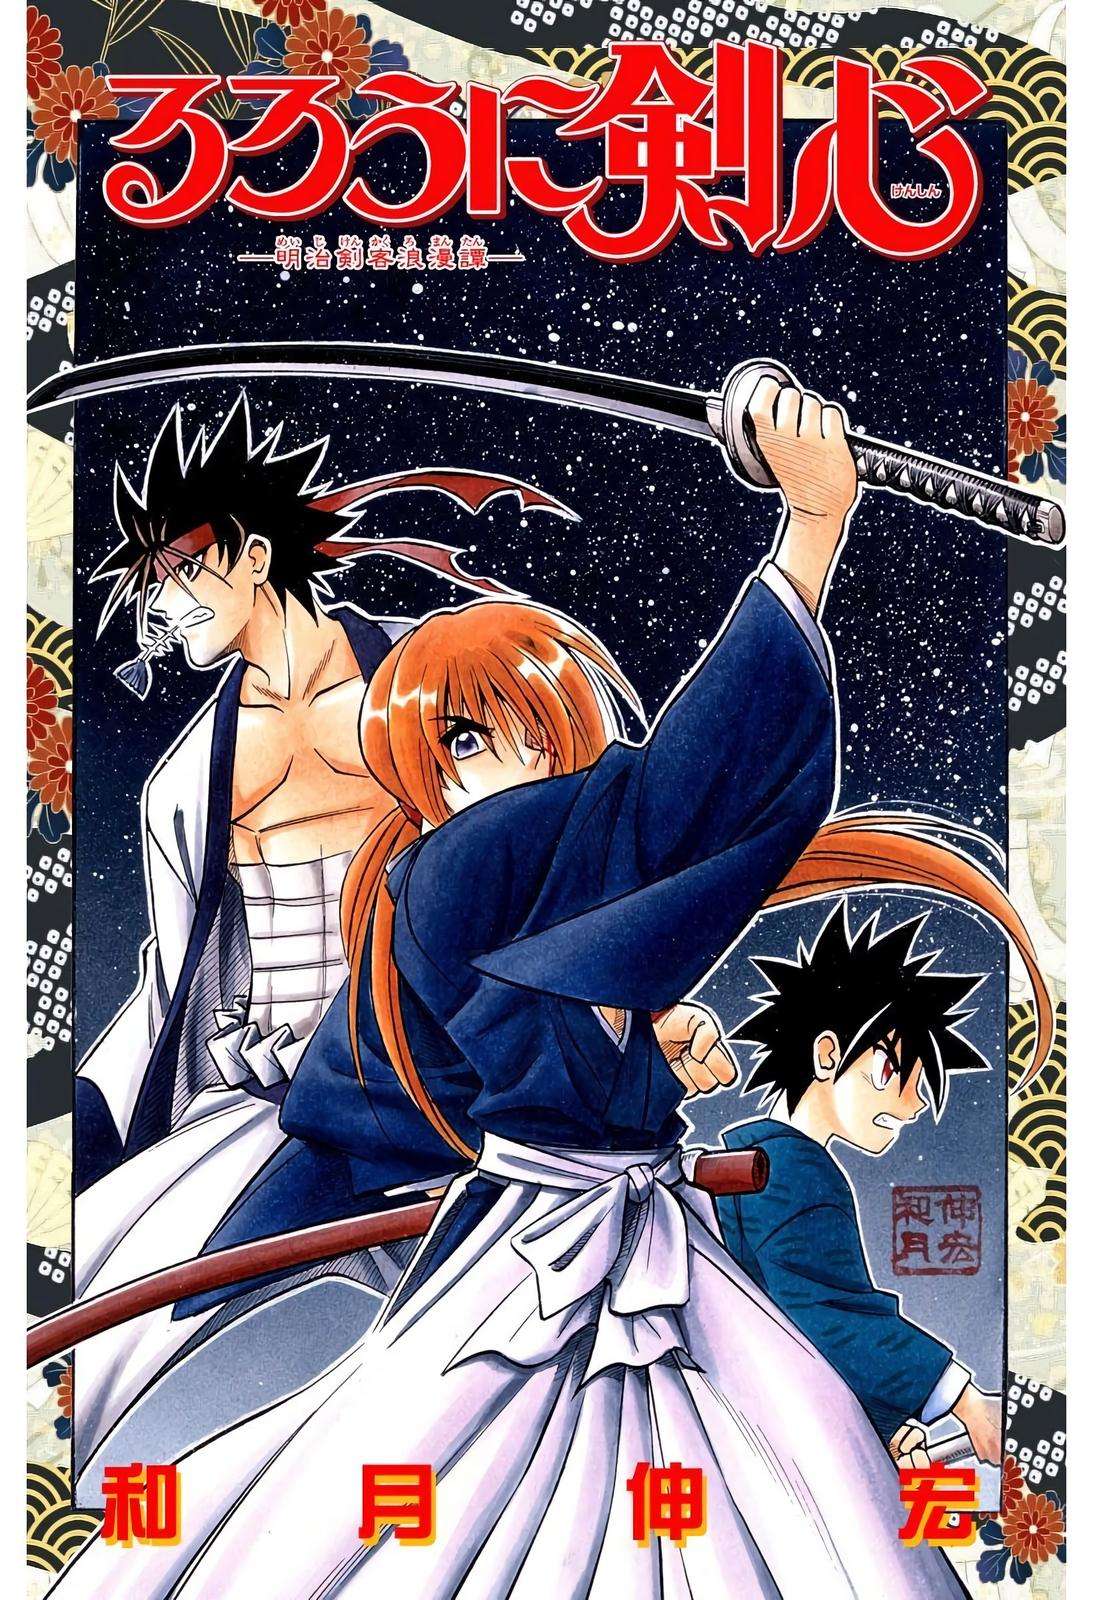 Rurouni Kenshin - Digital Colored Comics - chapter 218 - #1